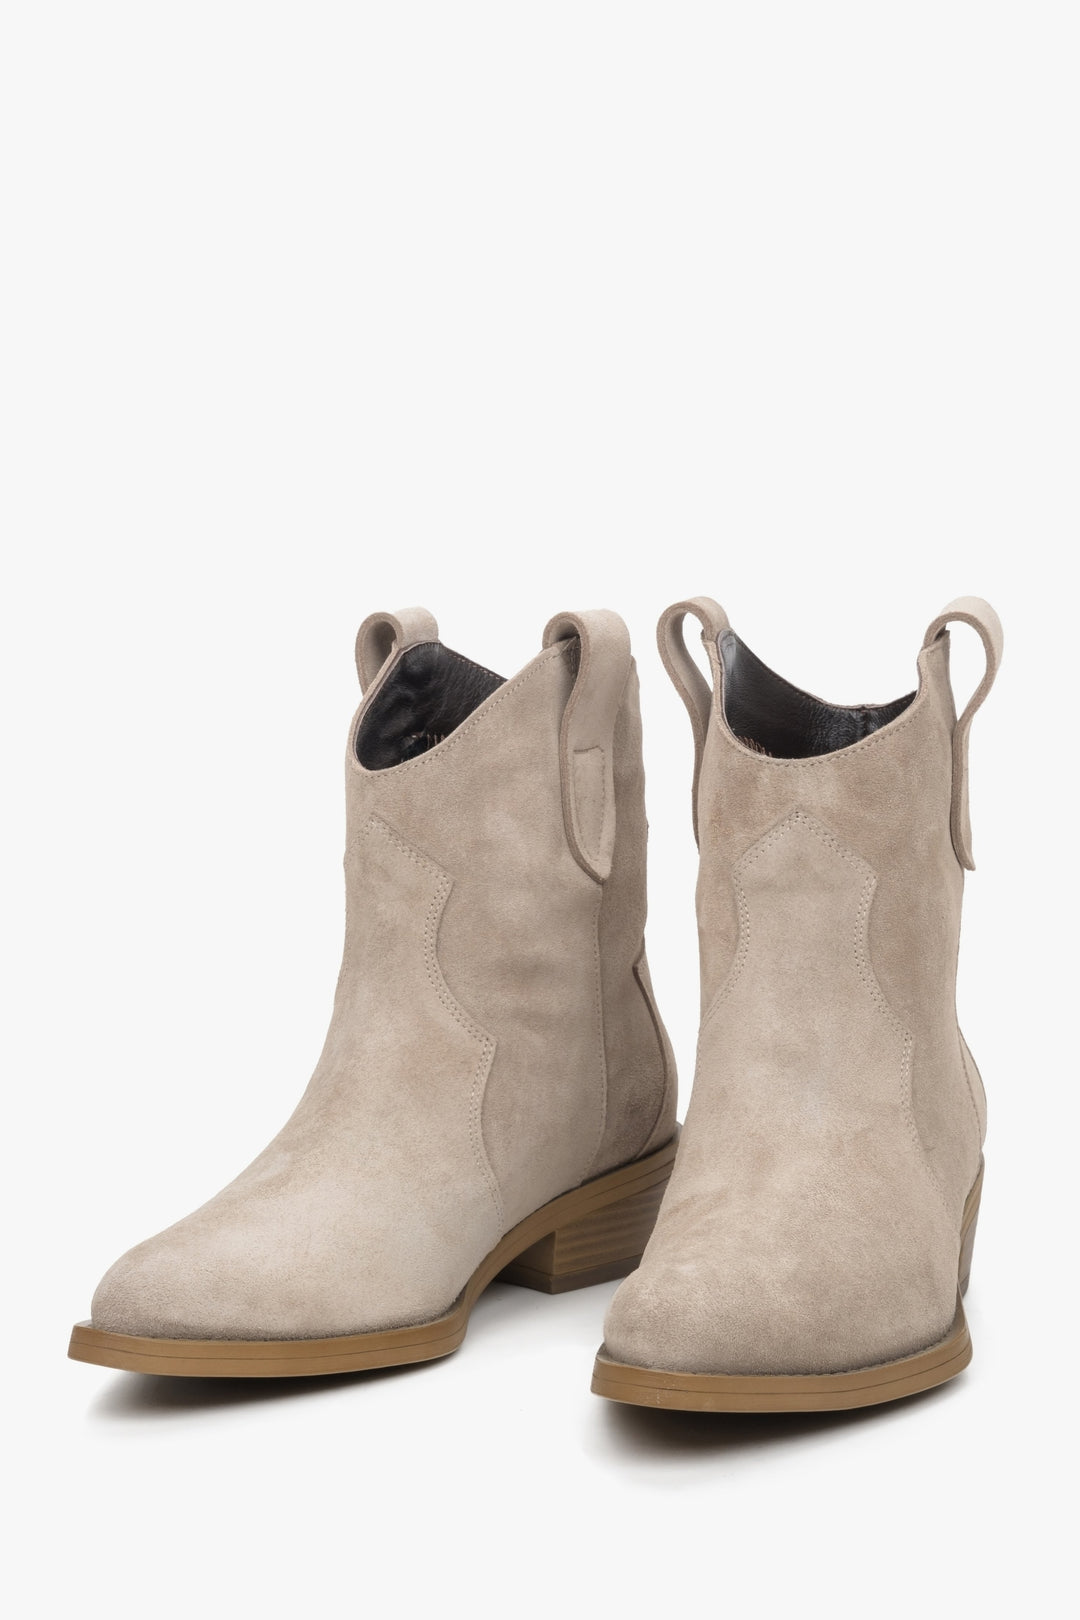 Women's beige velour cowboy boots by Estro - close-up on the toe.